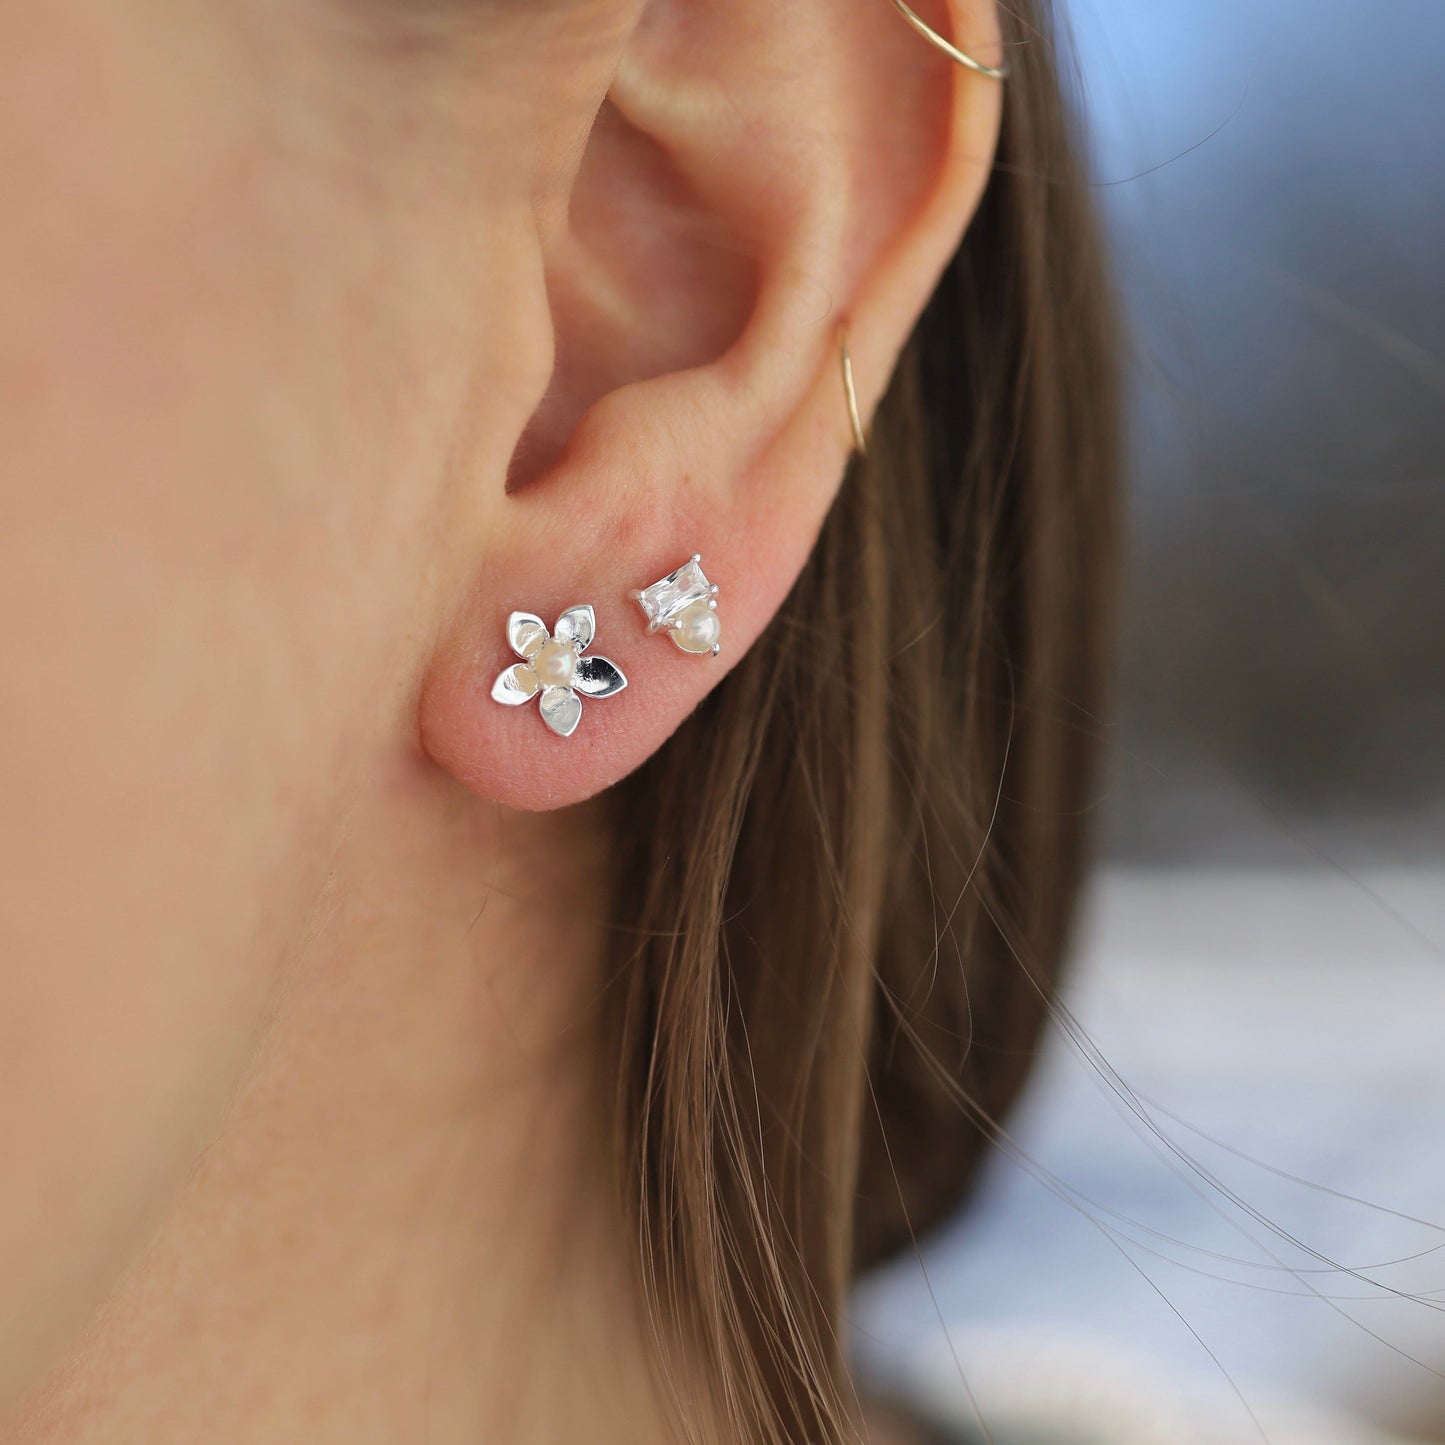 EAR Sterling Silver Flower with Center Pearl Stud Earrings